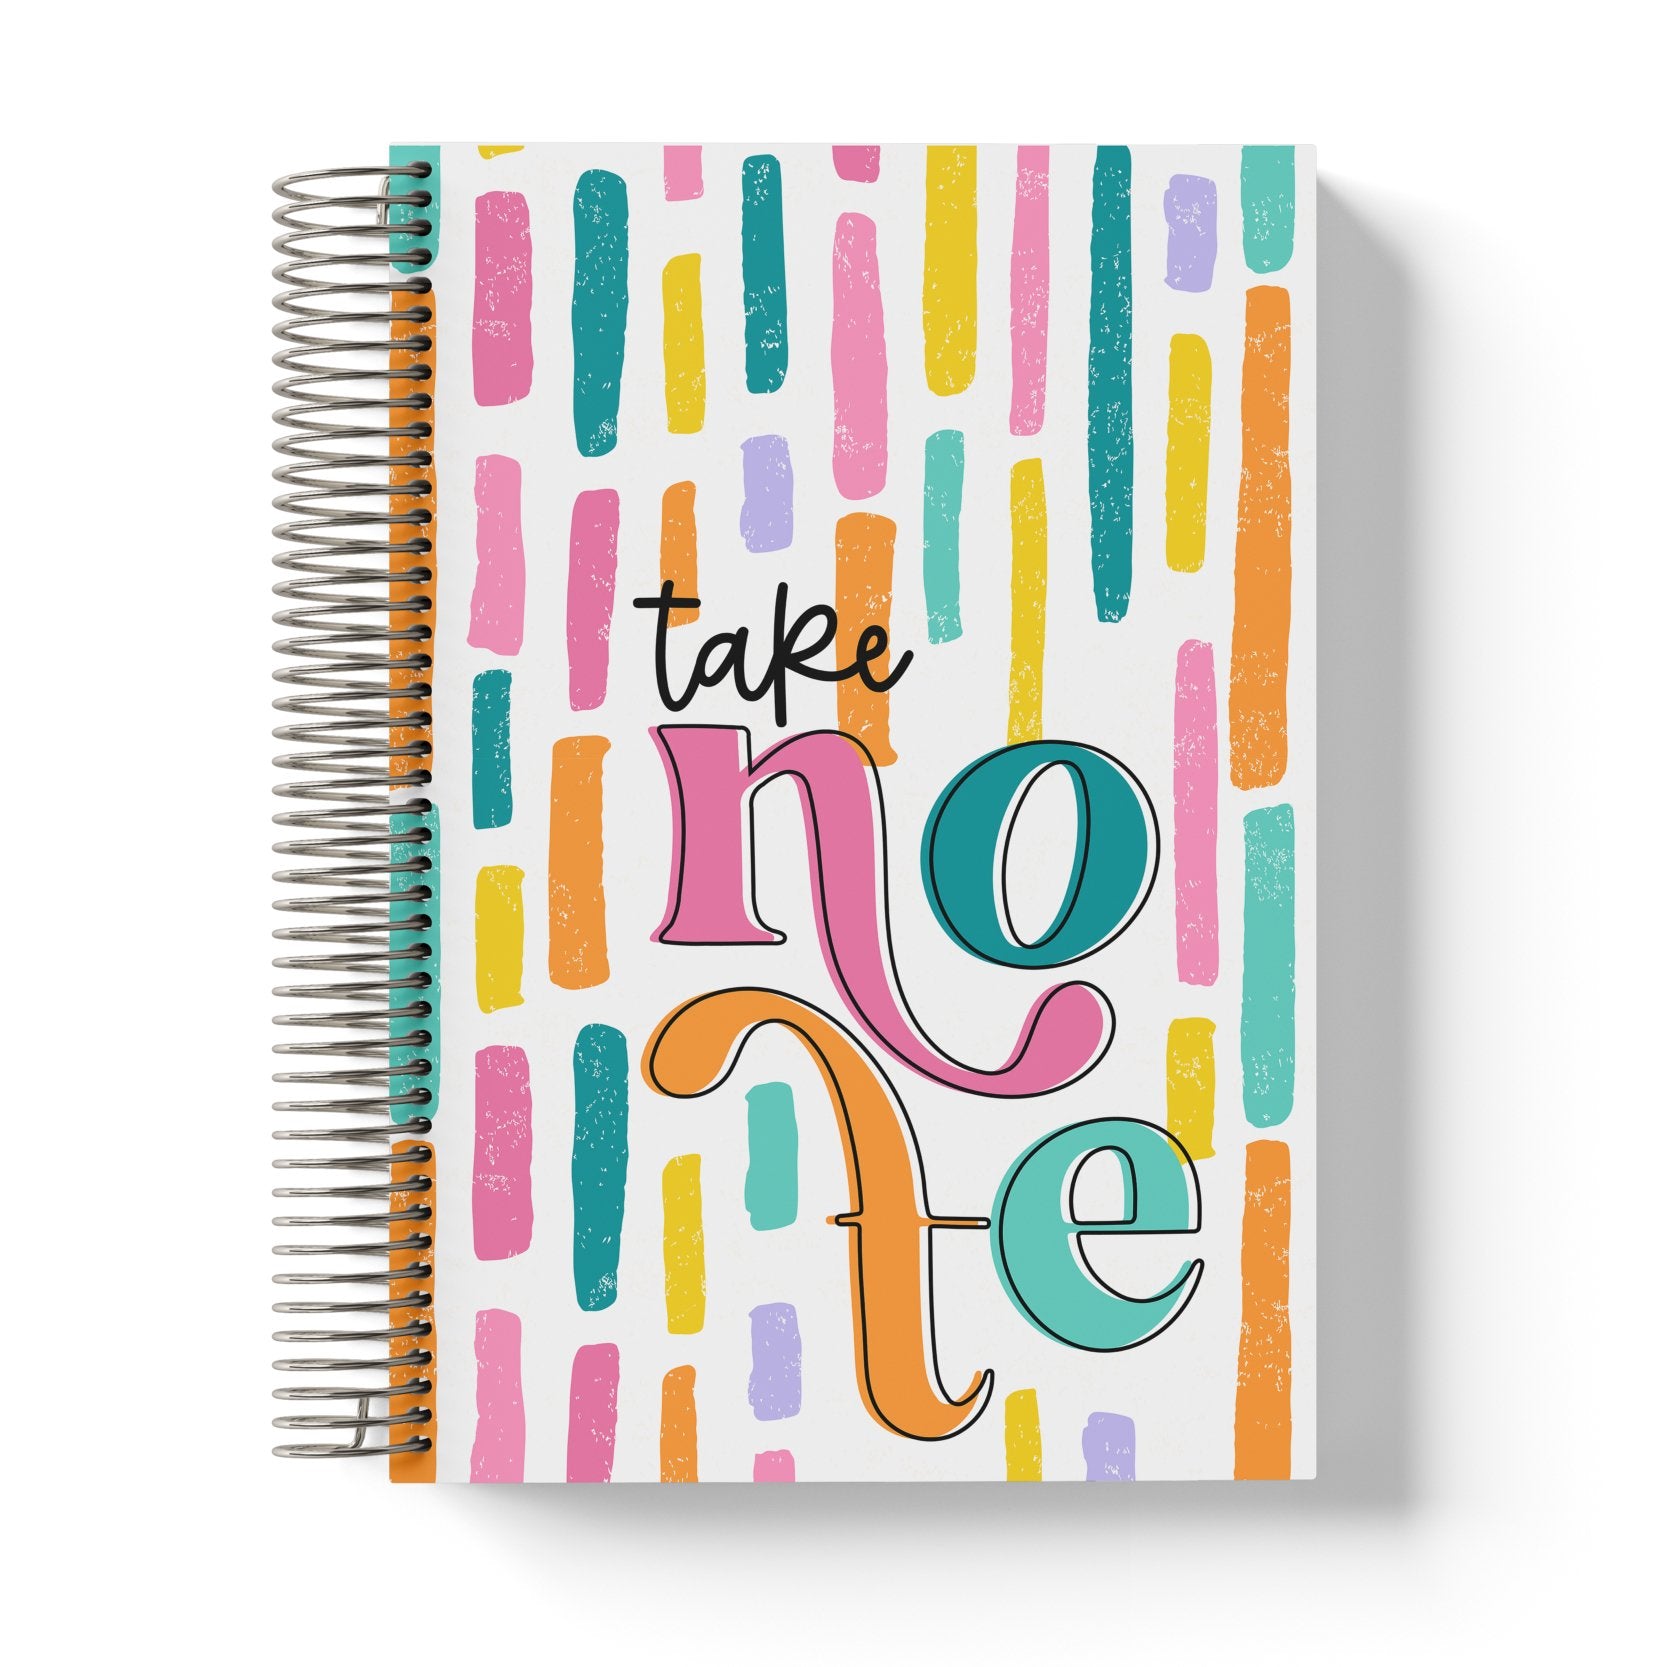 Take Note Notebook - ohsopaper